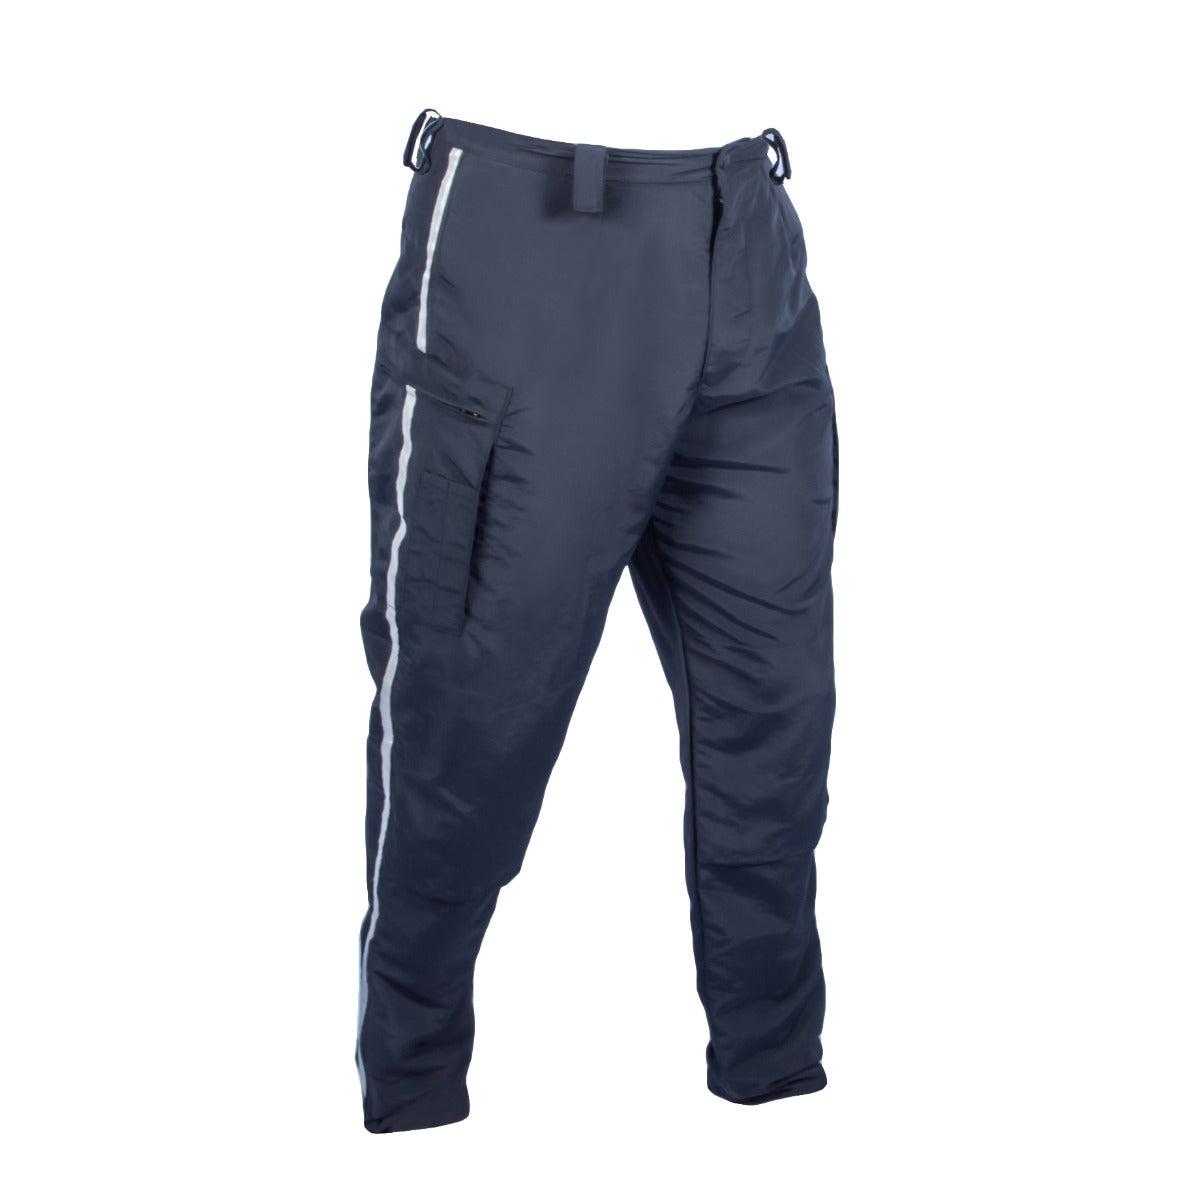 Waterproof Cycling Pants - Sound Uniform Solutions